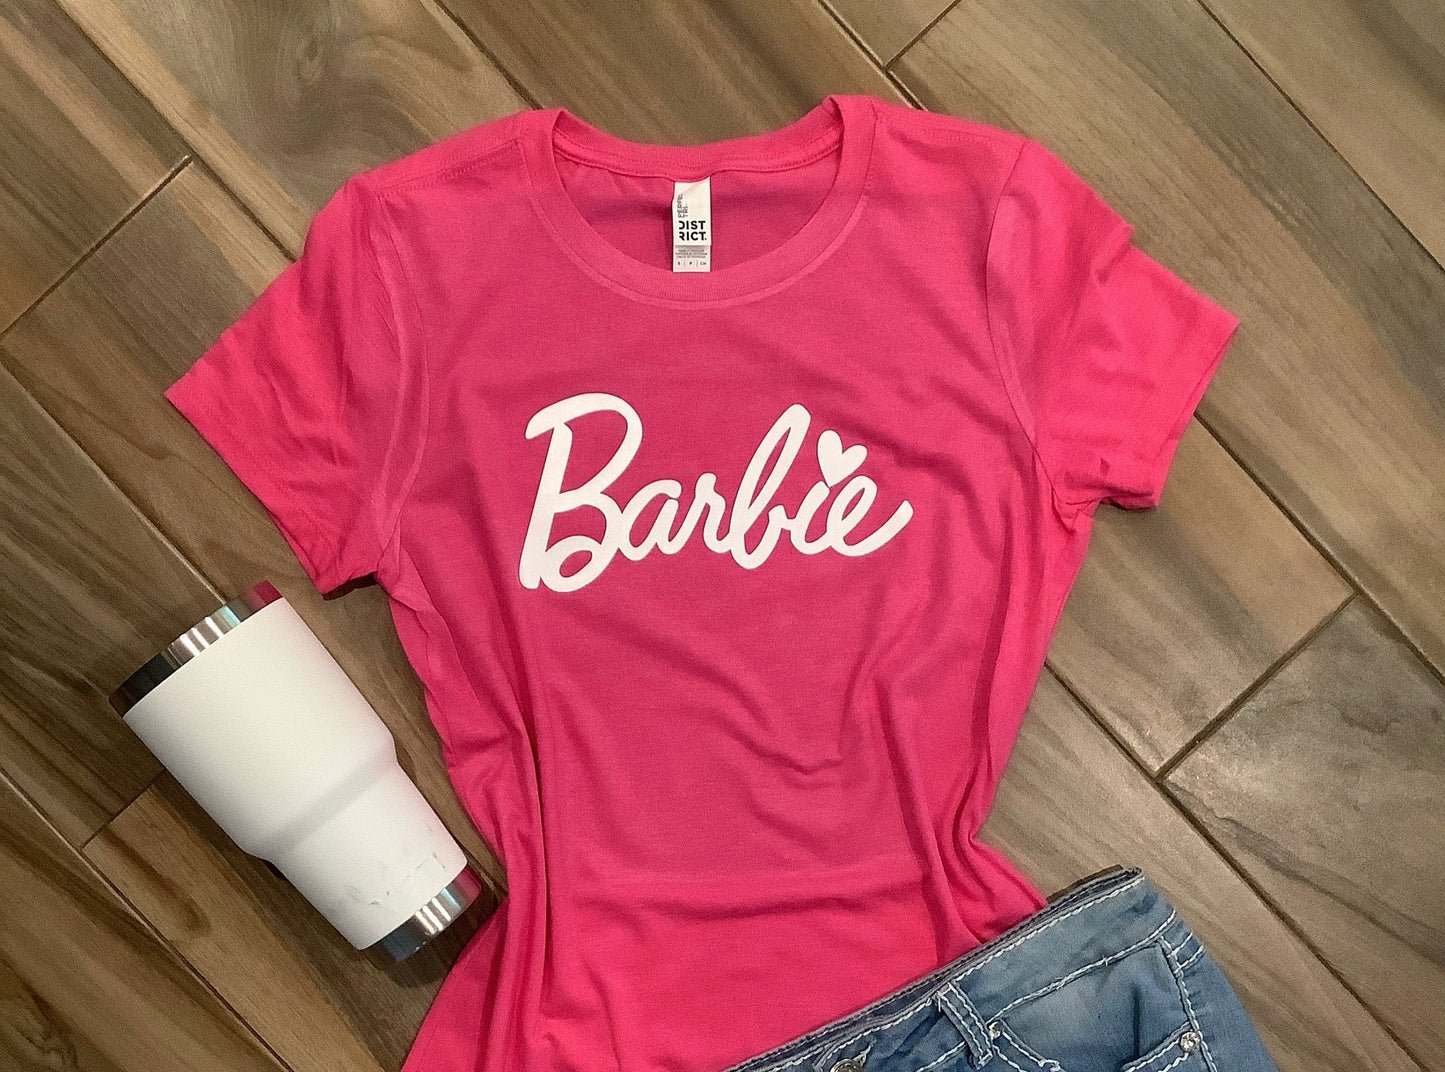 Pink Barbie t-shirt